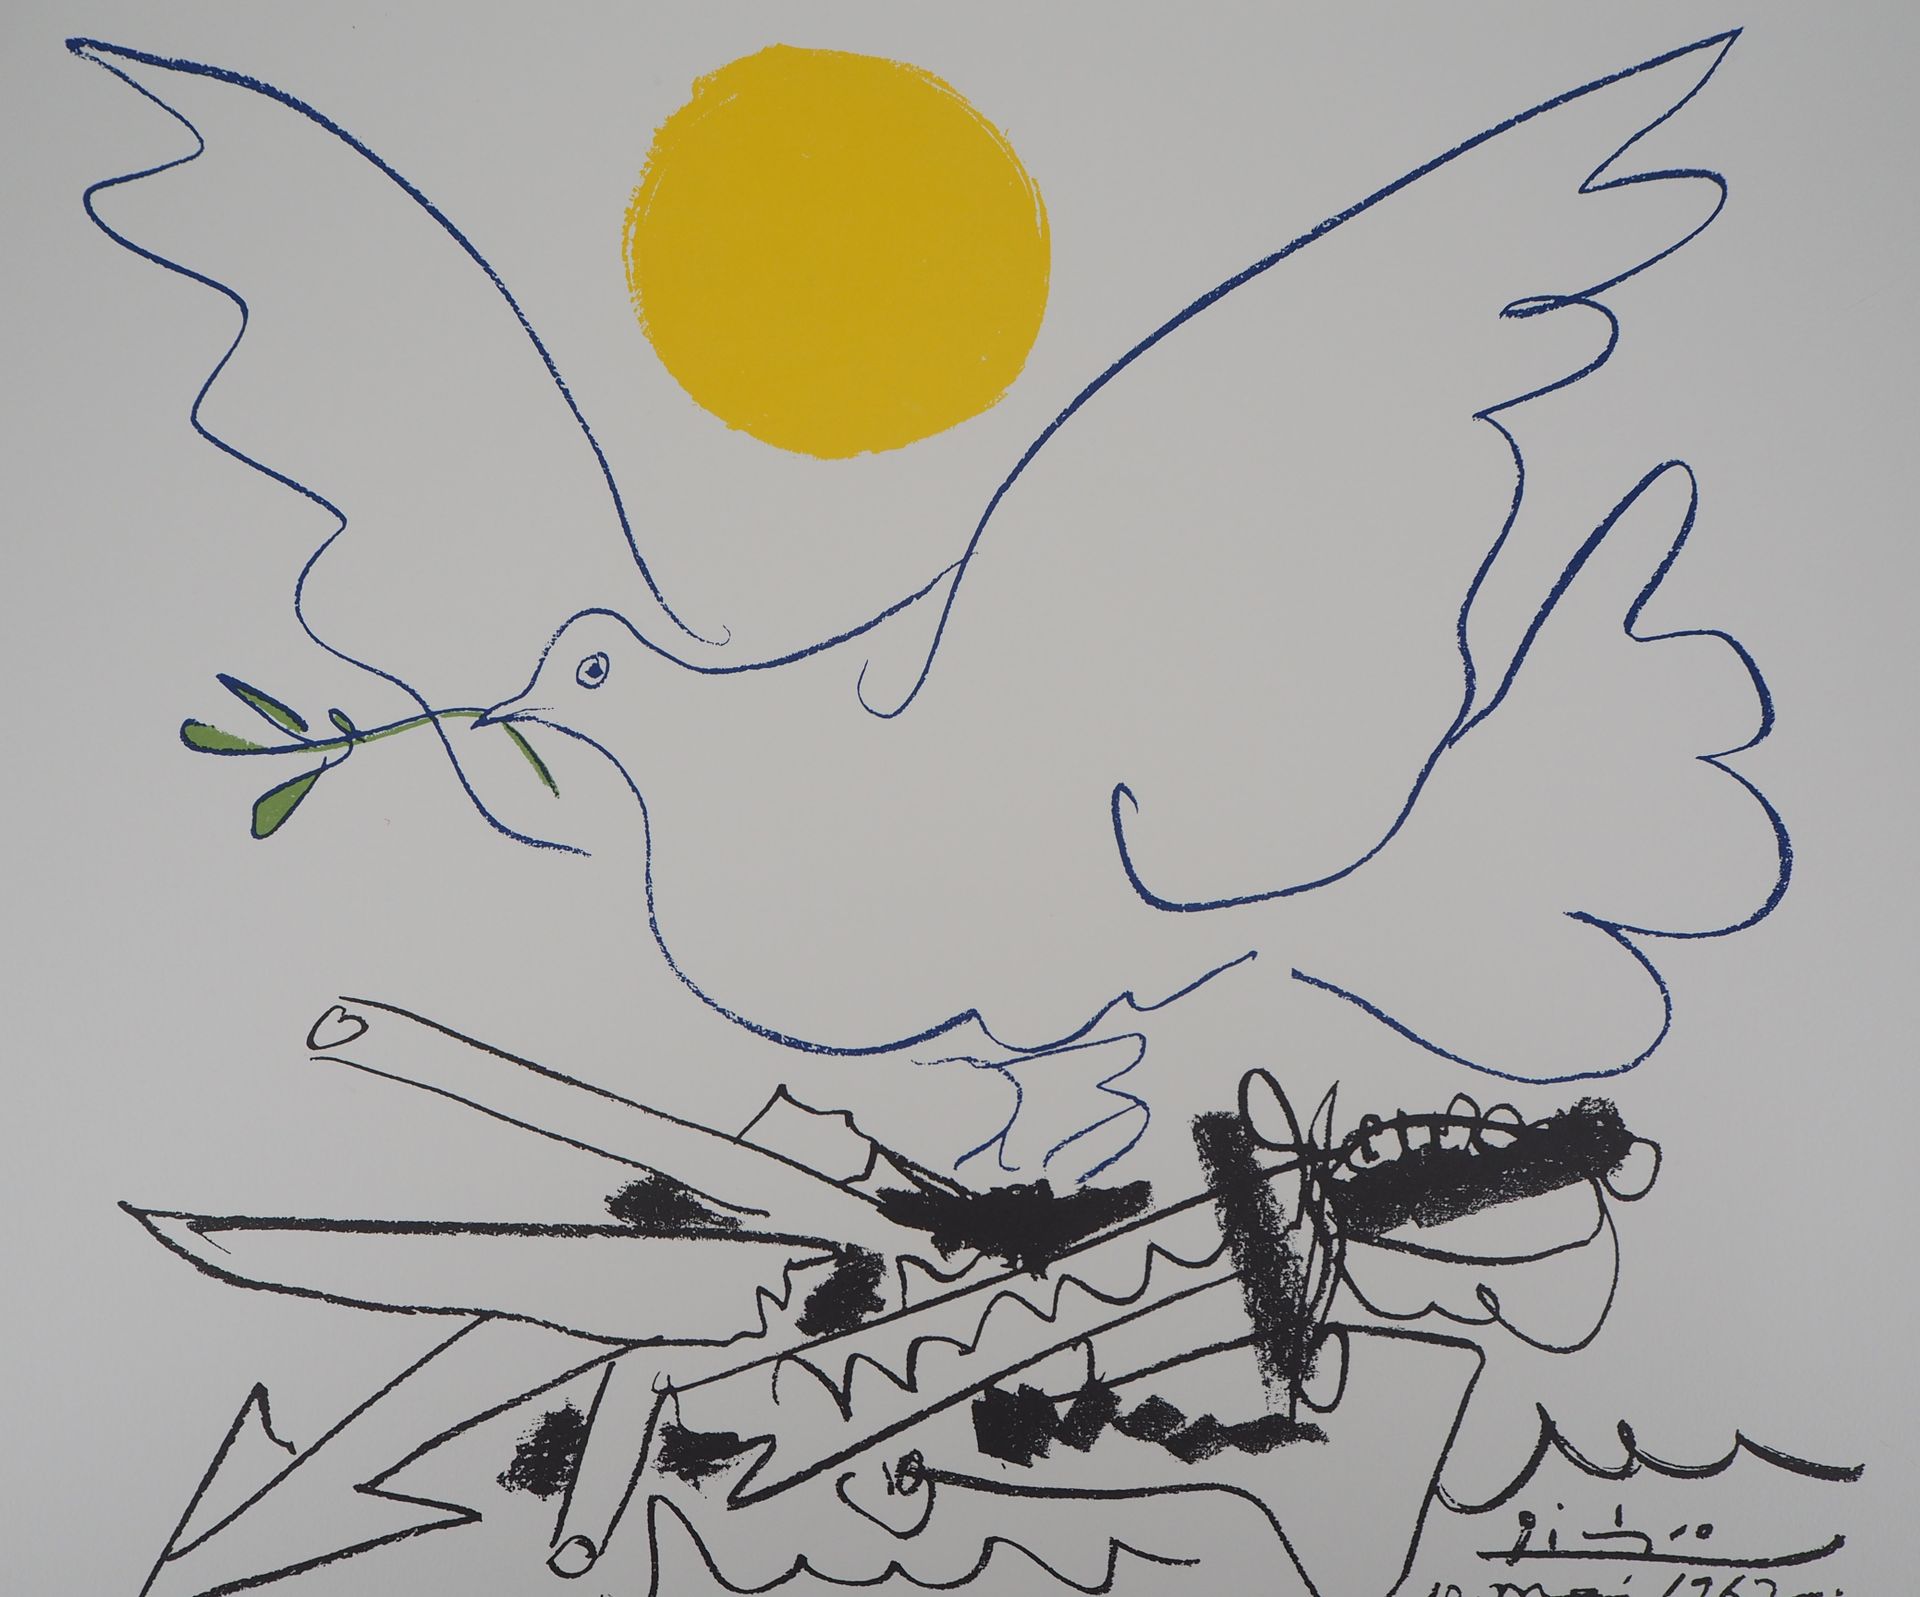 Pablo PICASSO 巴勃罗-皮卡索（后）

未来的鸽子

在版画上签名的石版画

牛皮纸上

尺寸：49.5 x 65.5厘米

状况极佳

版权所有：&hellip;